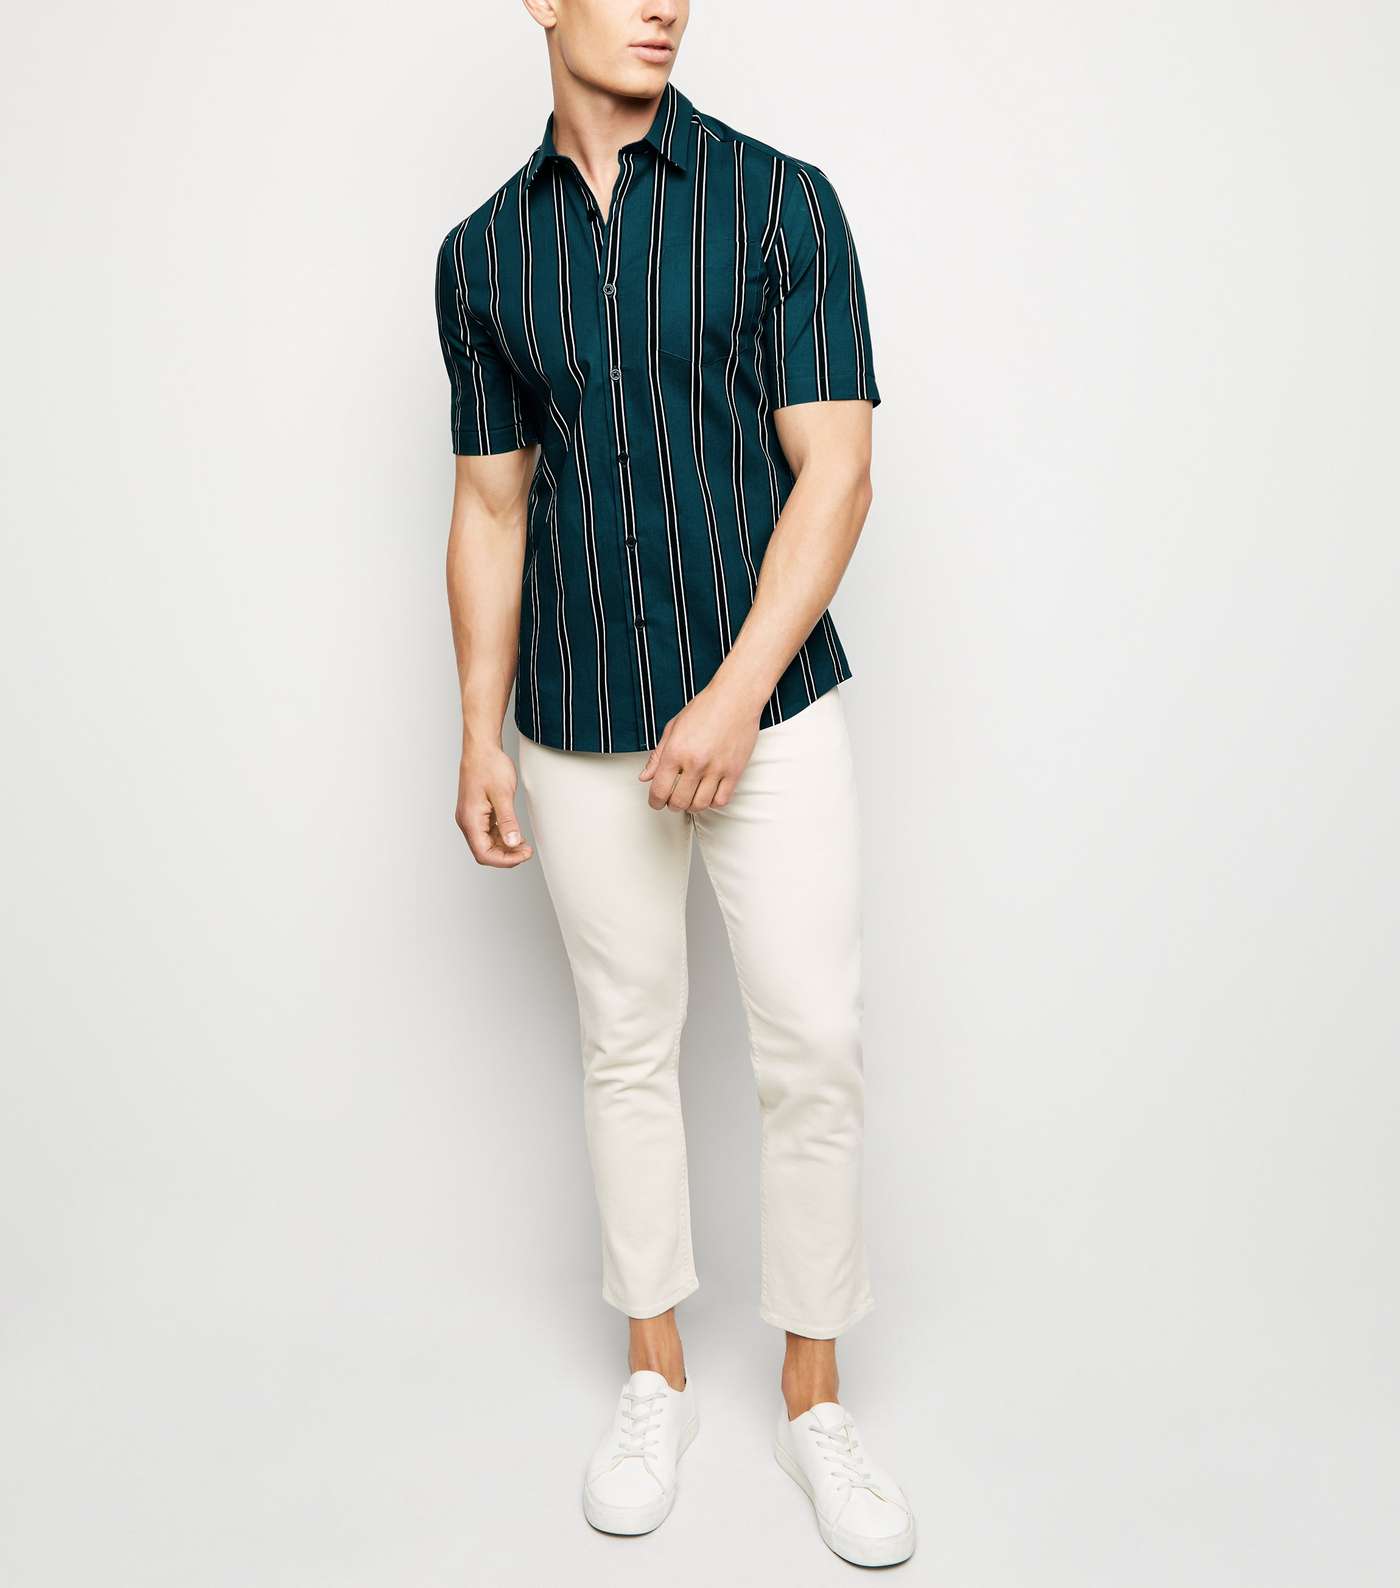 Green Vertical Stripe Muscle Fit Short Sleeve Shirt Image 2